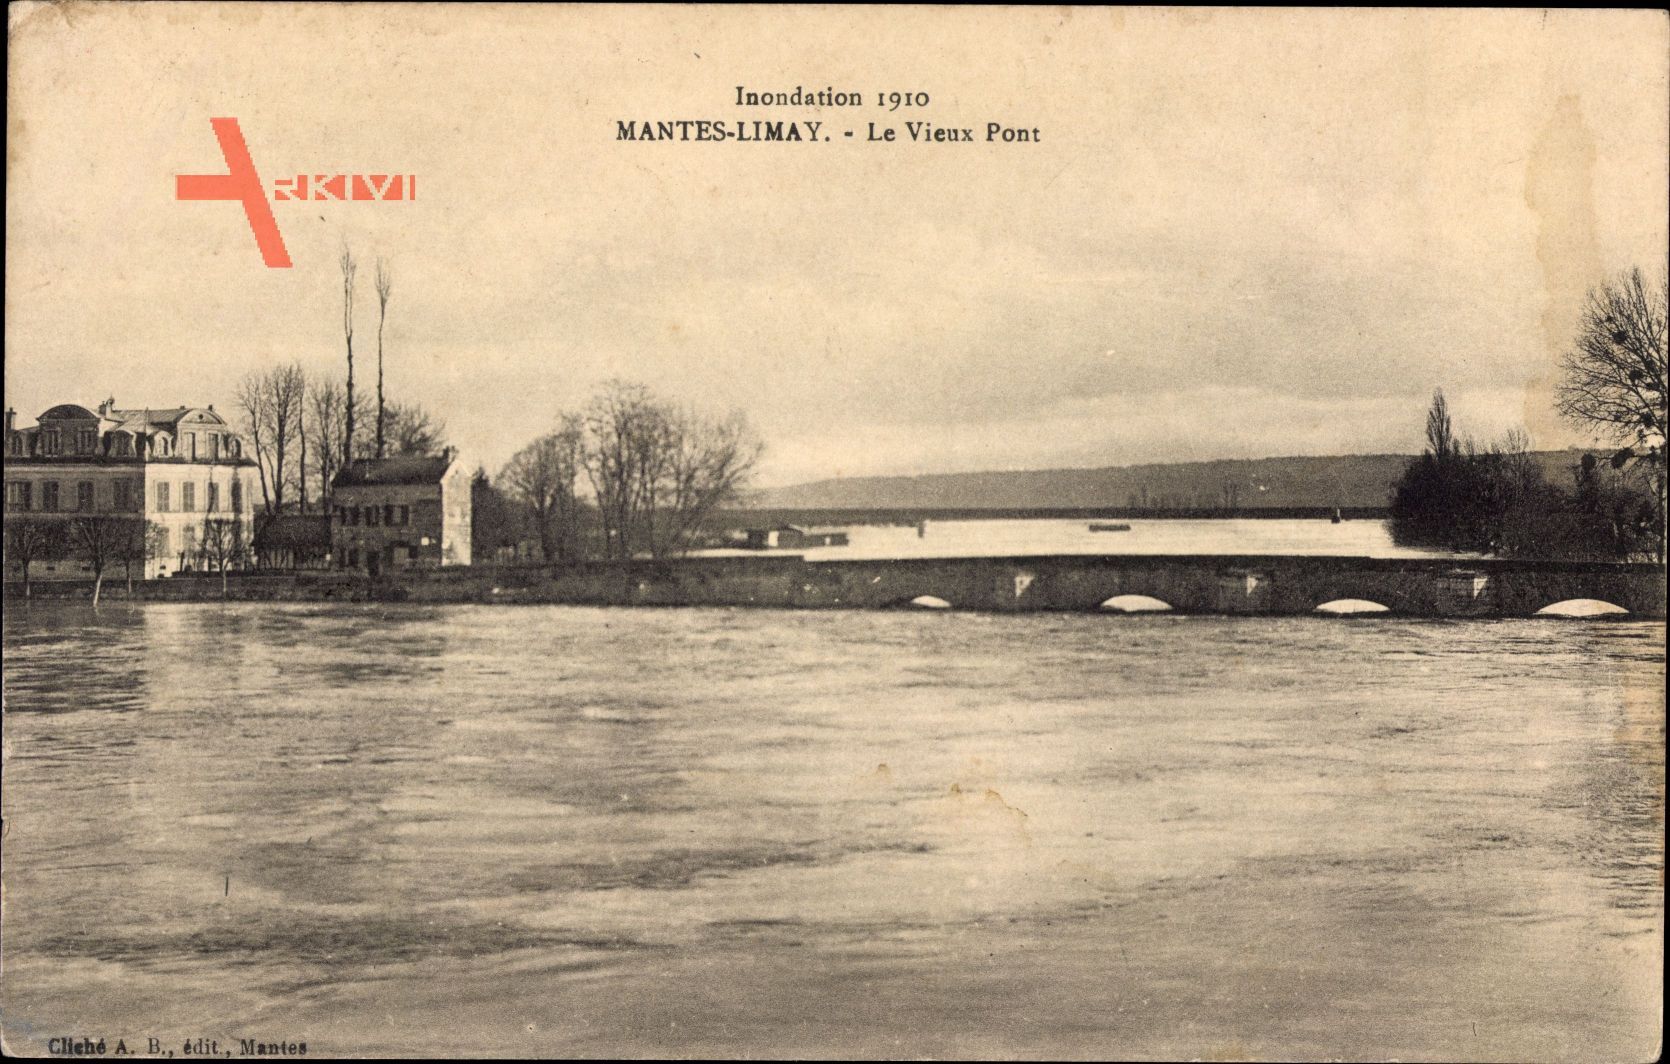 Mantes Limay Yvelines, Le Vieux Pont, Inondation 1910, Hochwasser